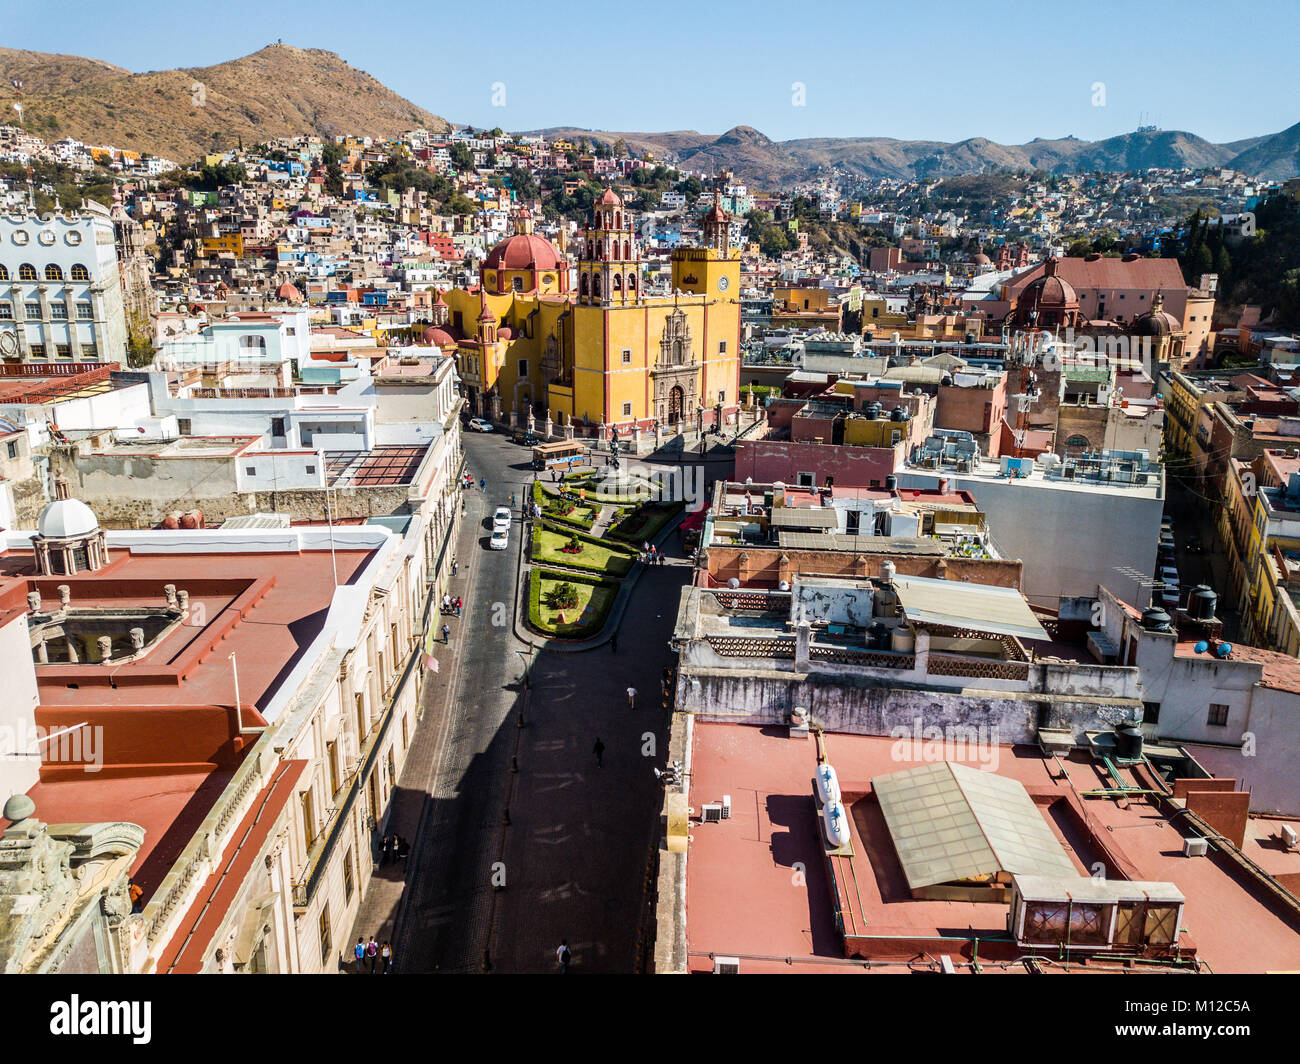 Collégiale basilique de Nuestra Señora de Guanajuato, ou Basilique de Notre Dame de Guanajuato, Mexique Banque D'Images